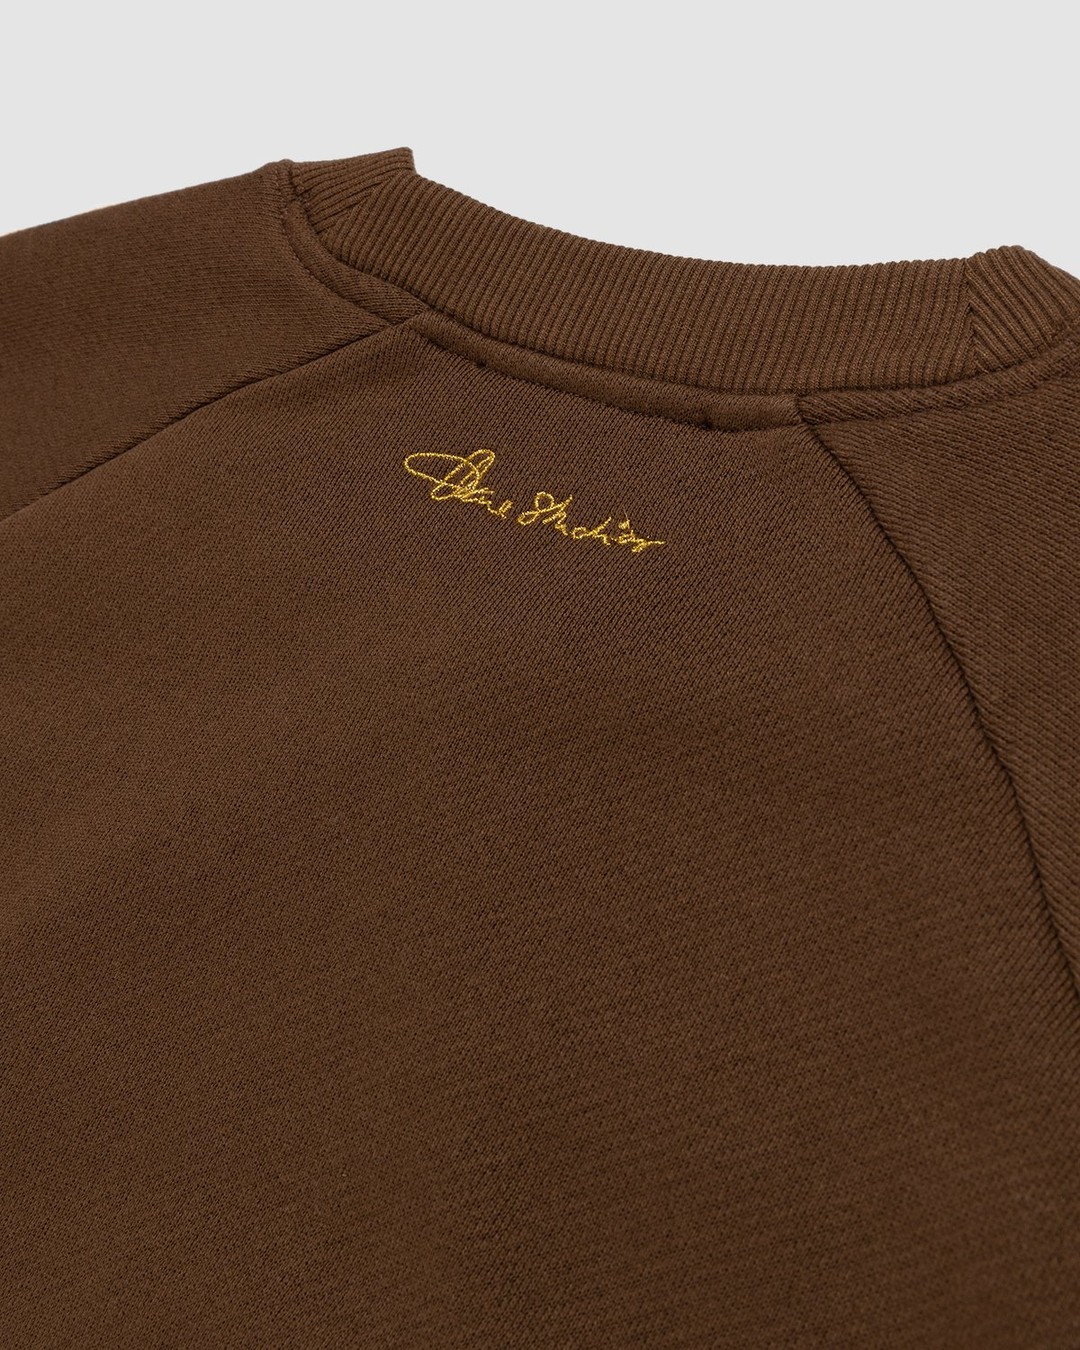 Acne Studios – Sweater Brown - Sweatshirts - Brown - Image 5